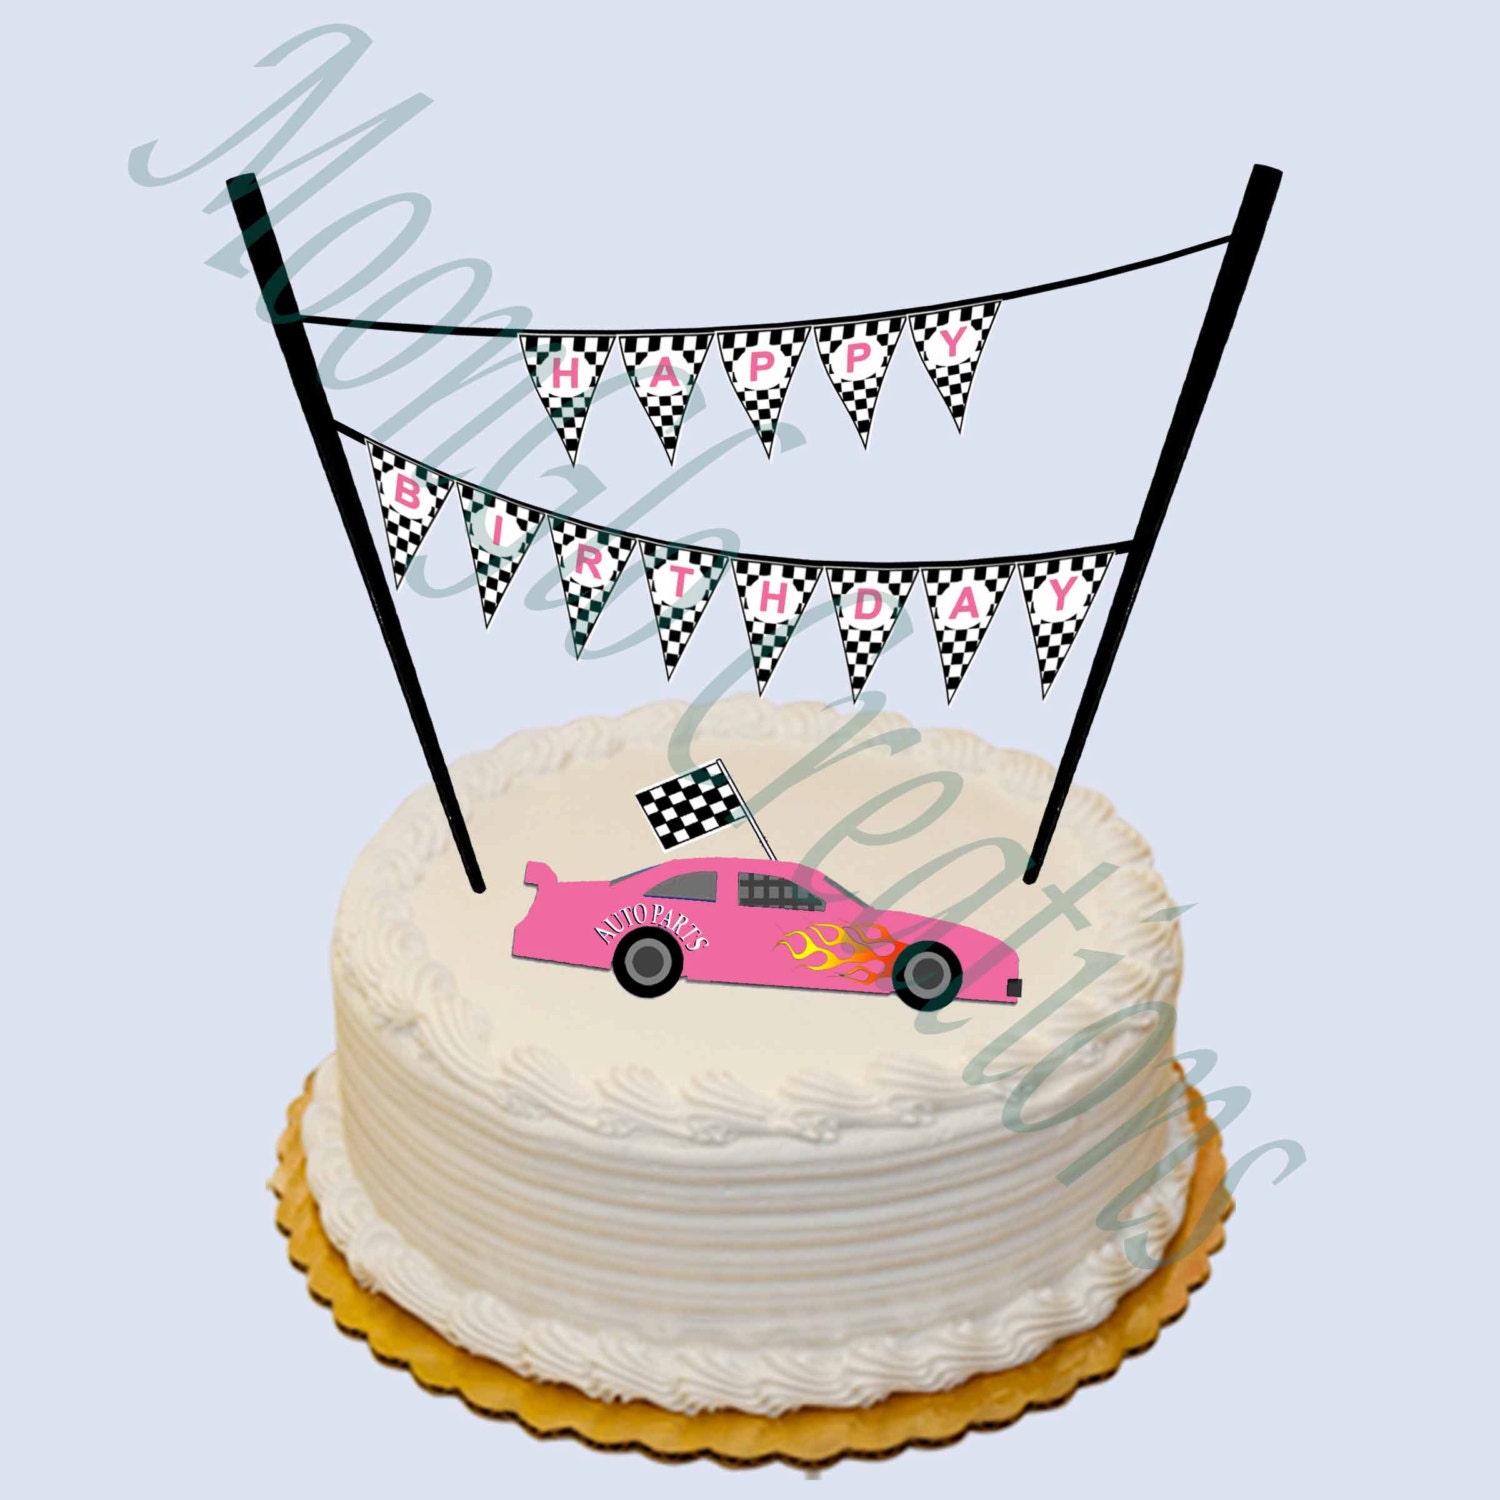 Race car theme 'Happy Birthday' cake banner .Pink. | Etsy